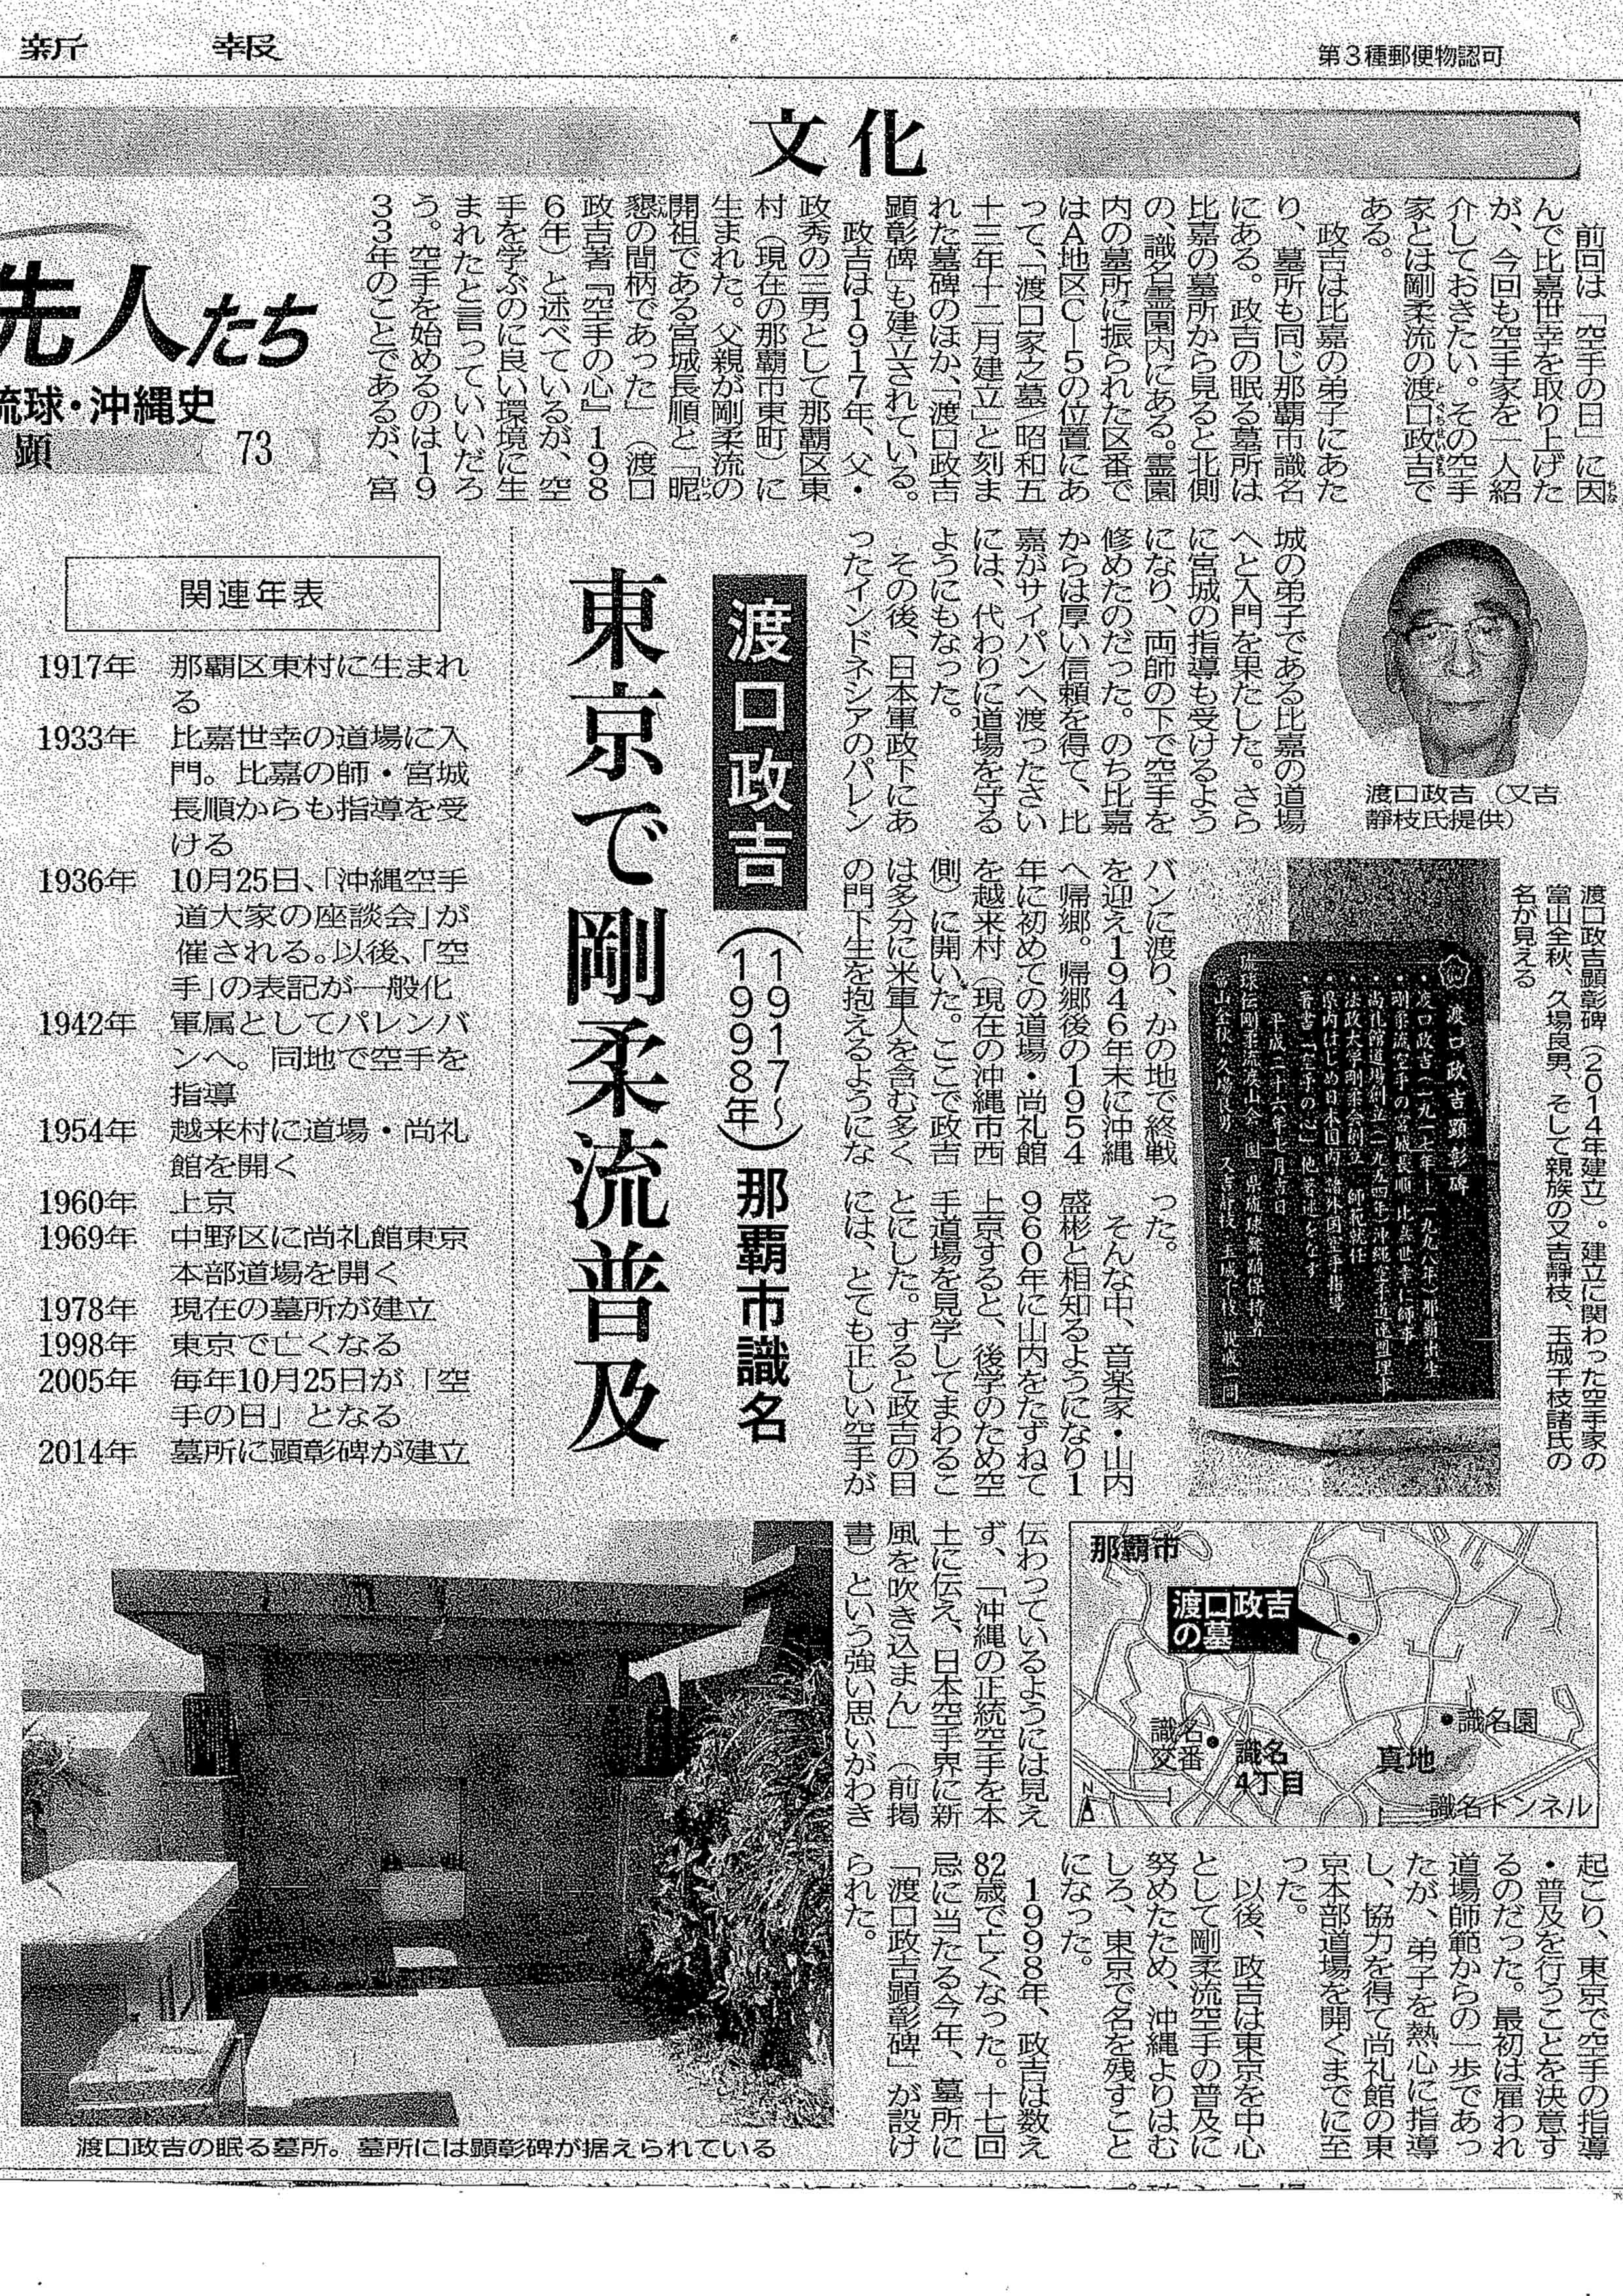 Articles of Ryukyu Shimpo to introduce Toguchi teacher